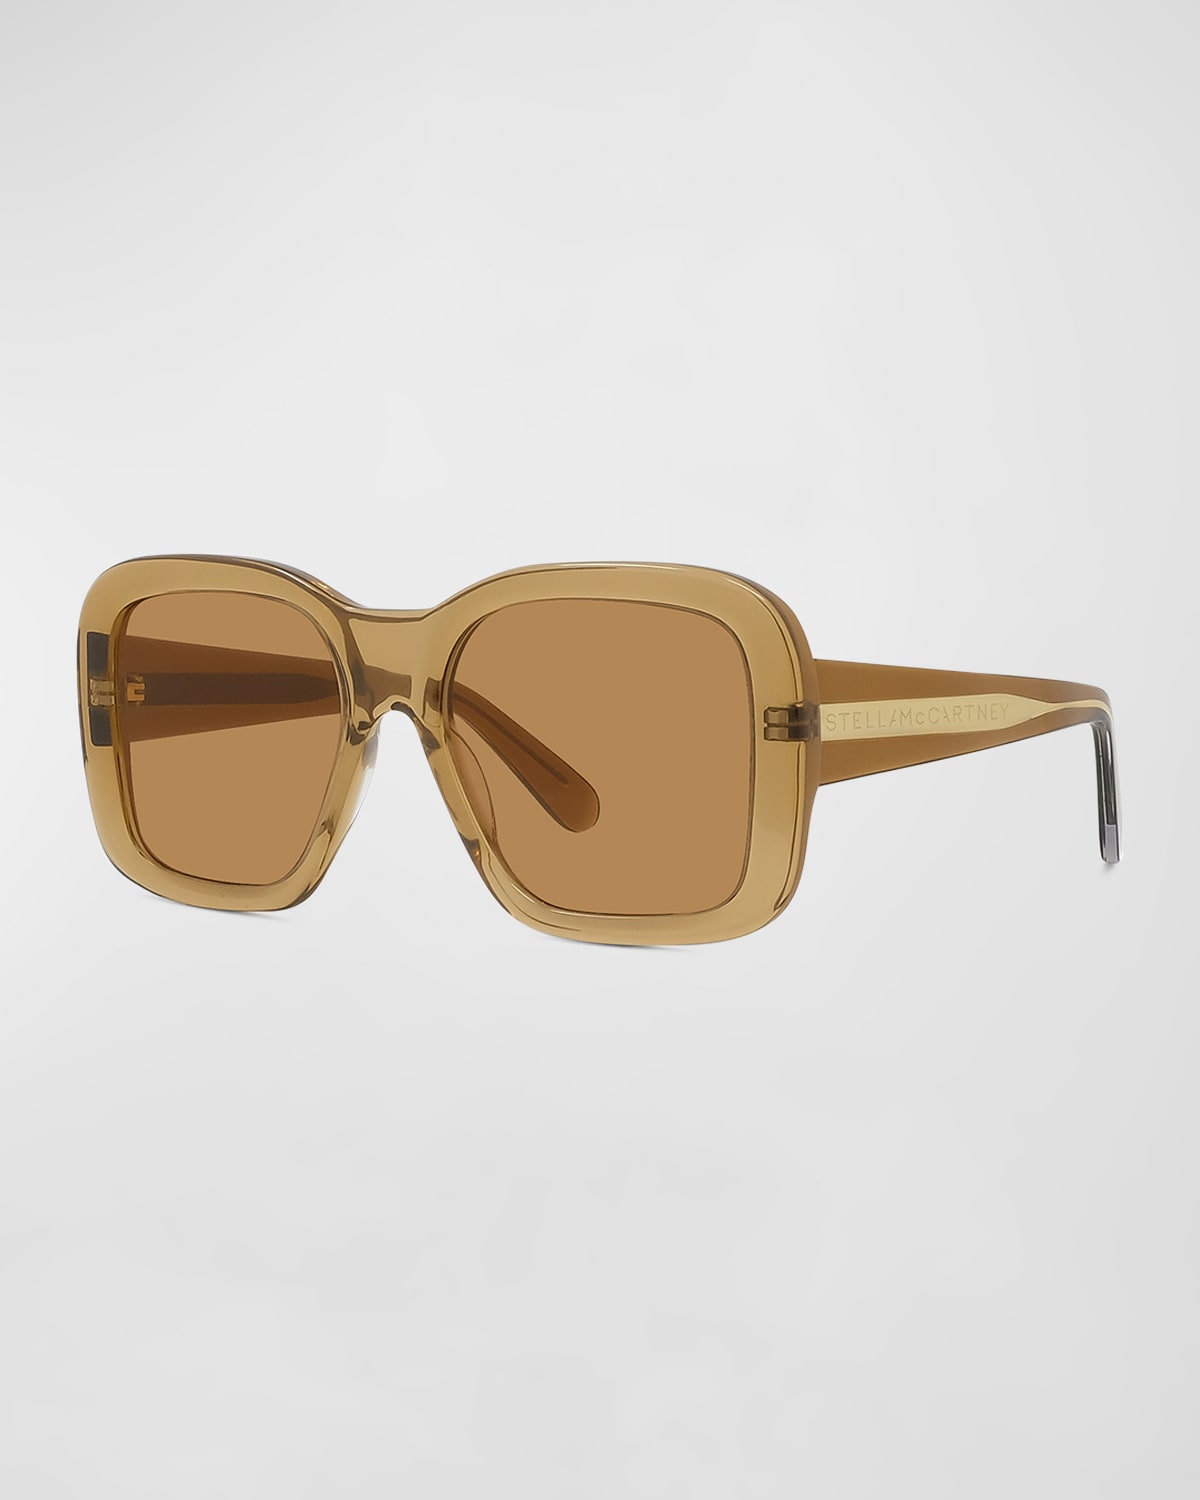 Stella Mccartney 2001 Acetate Square Sunglasses In Beige/brown Solid